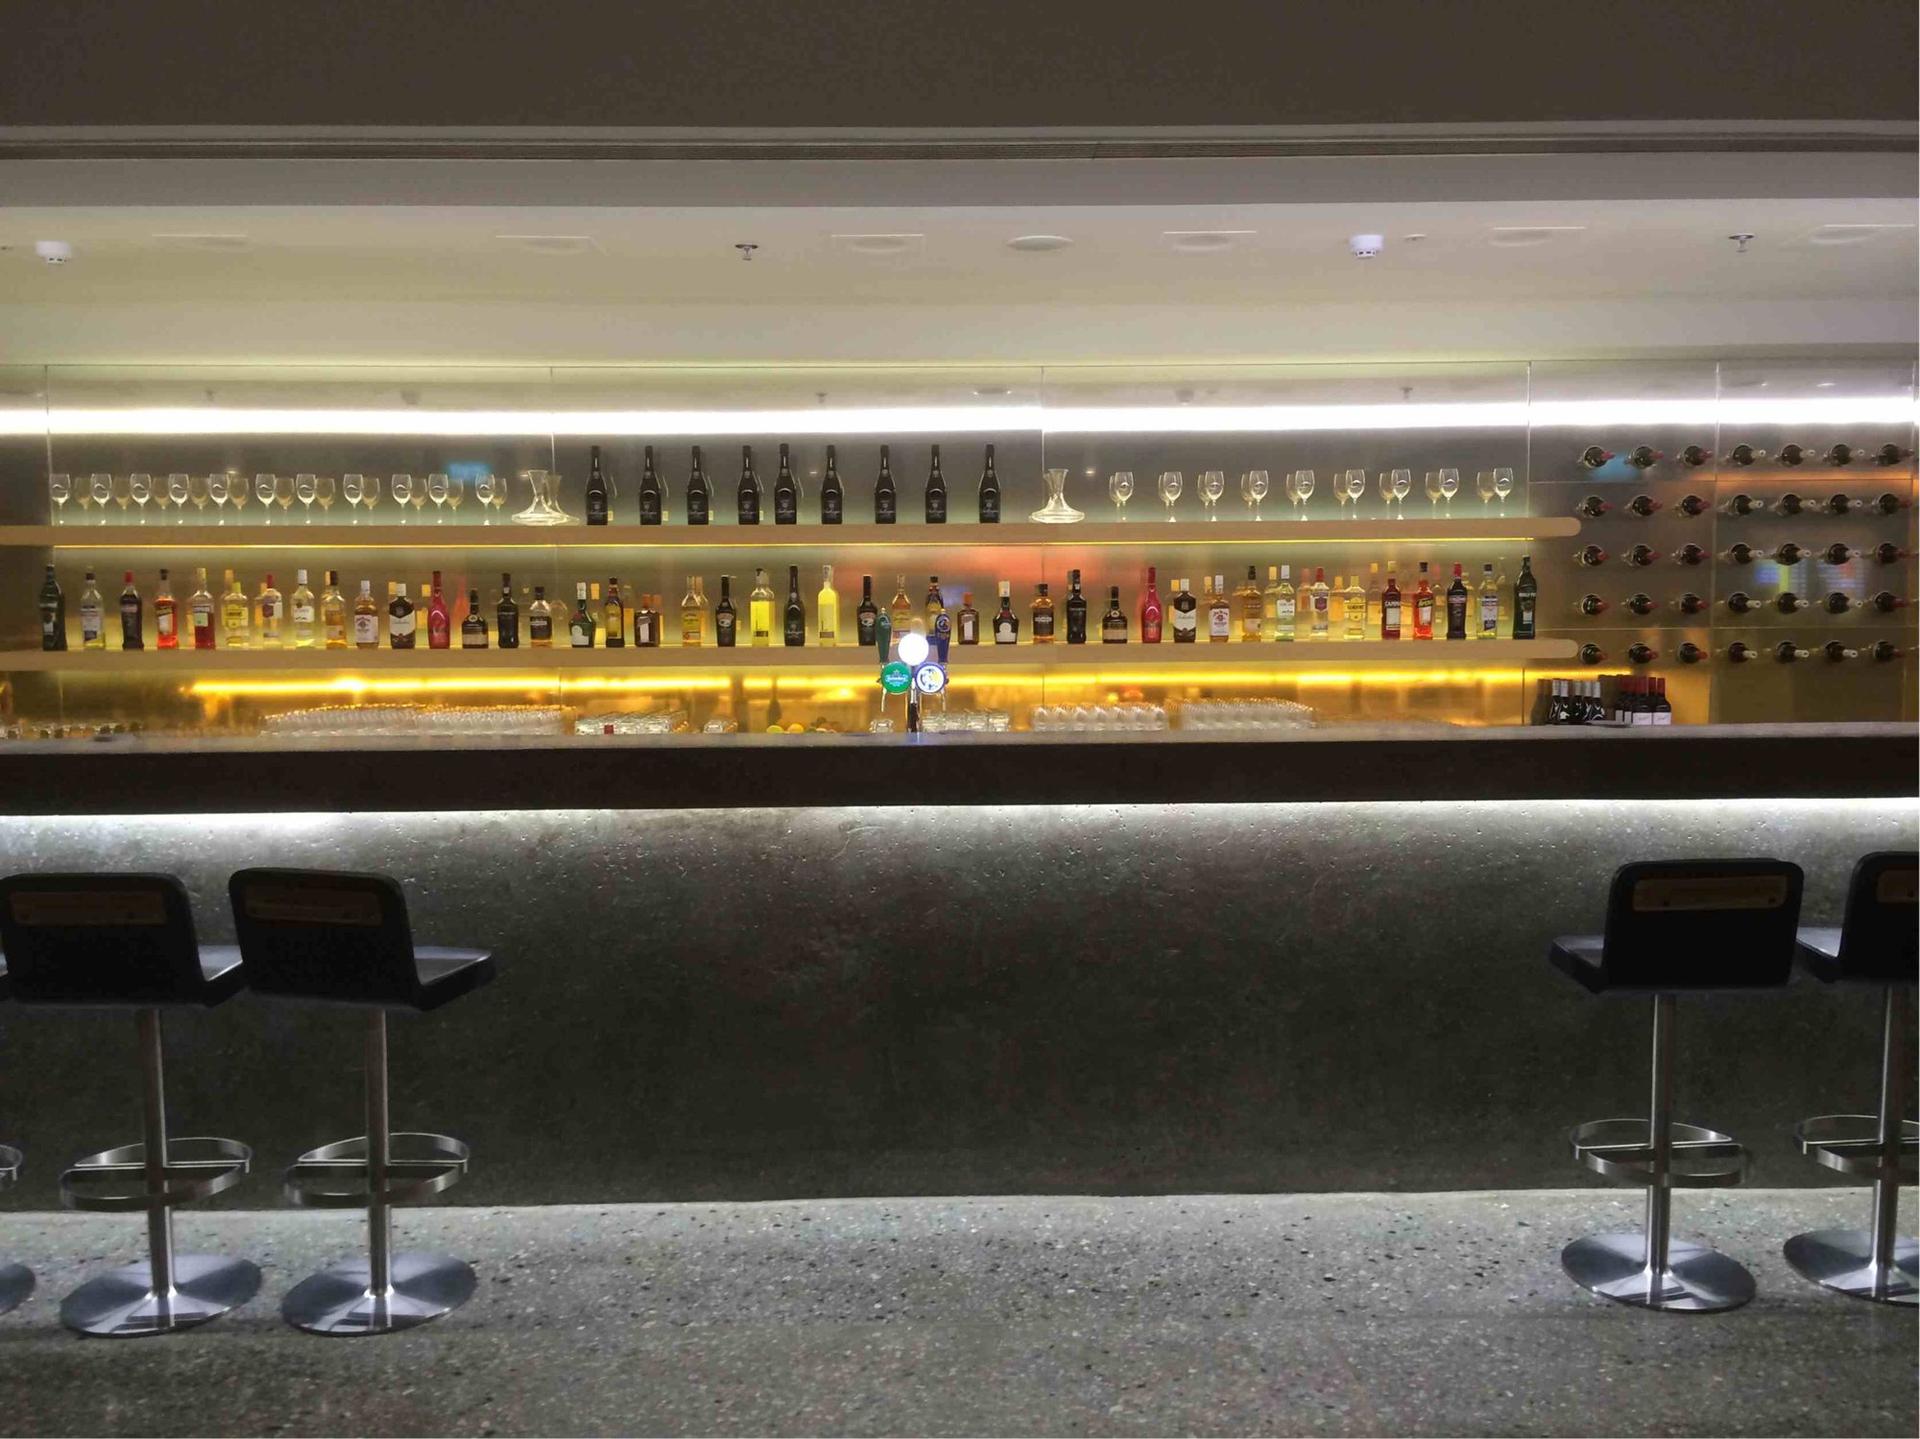 The Qantas Singapore Lounge image 20 of 49